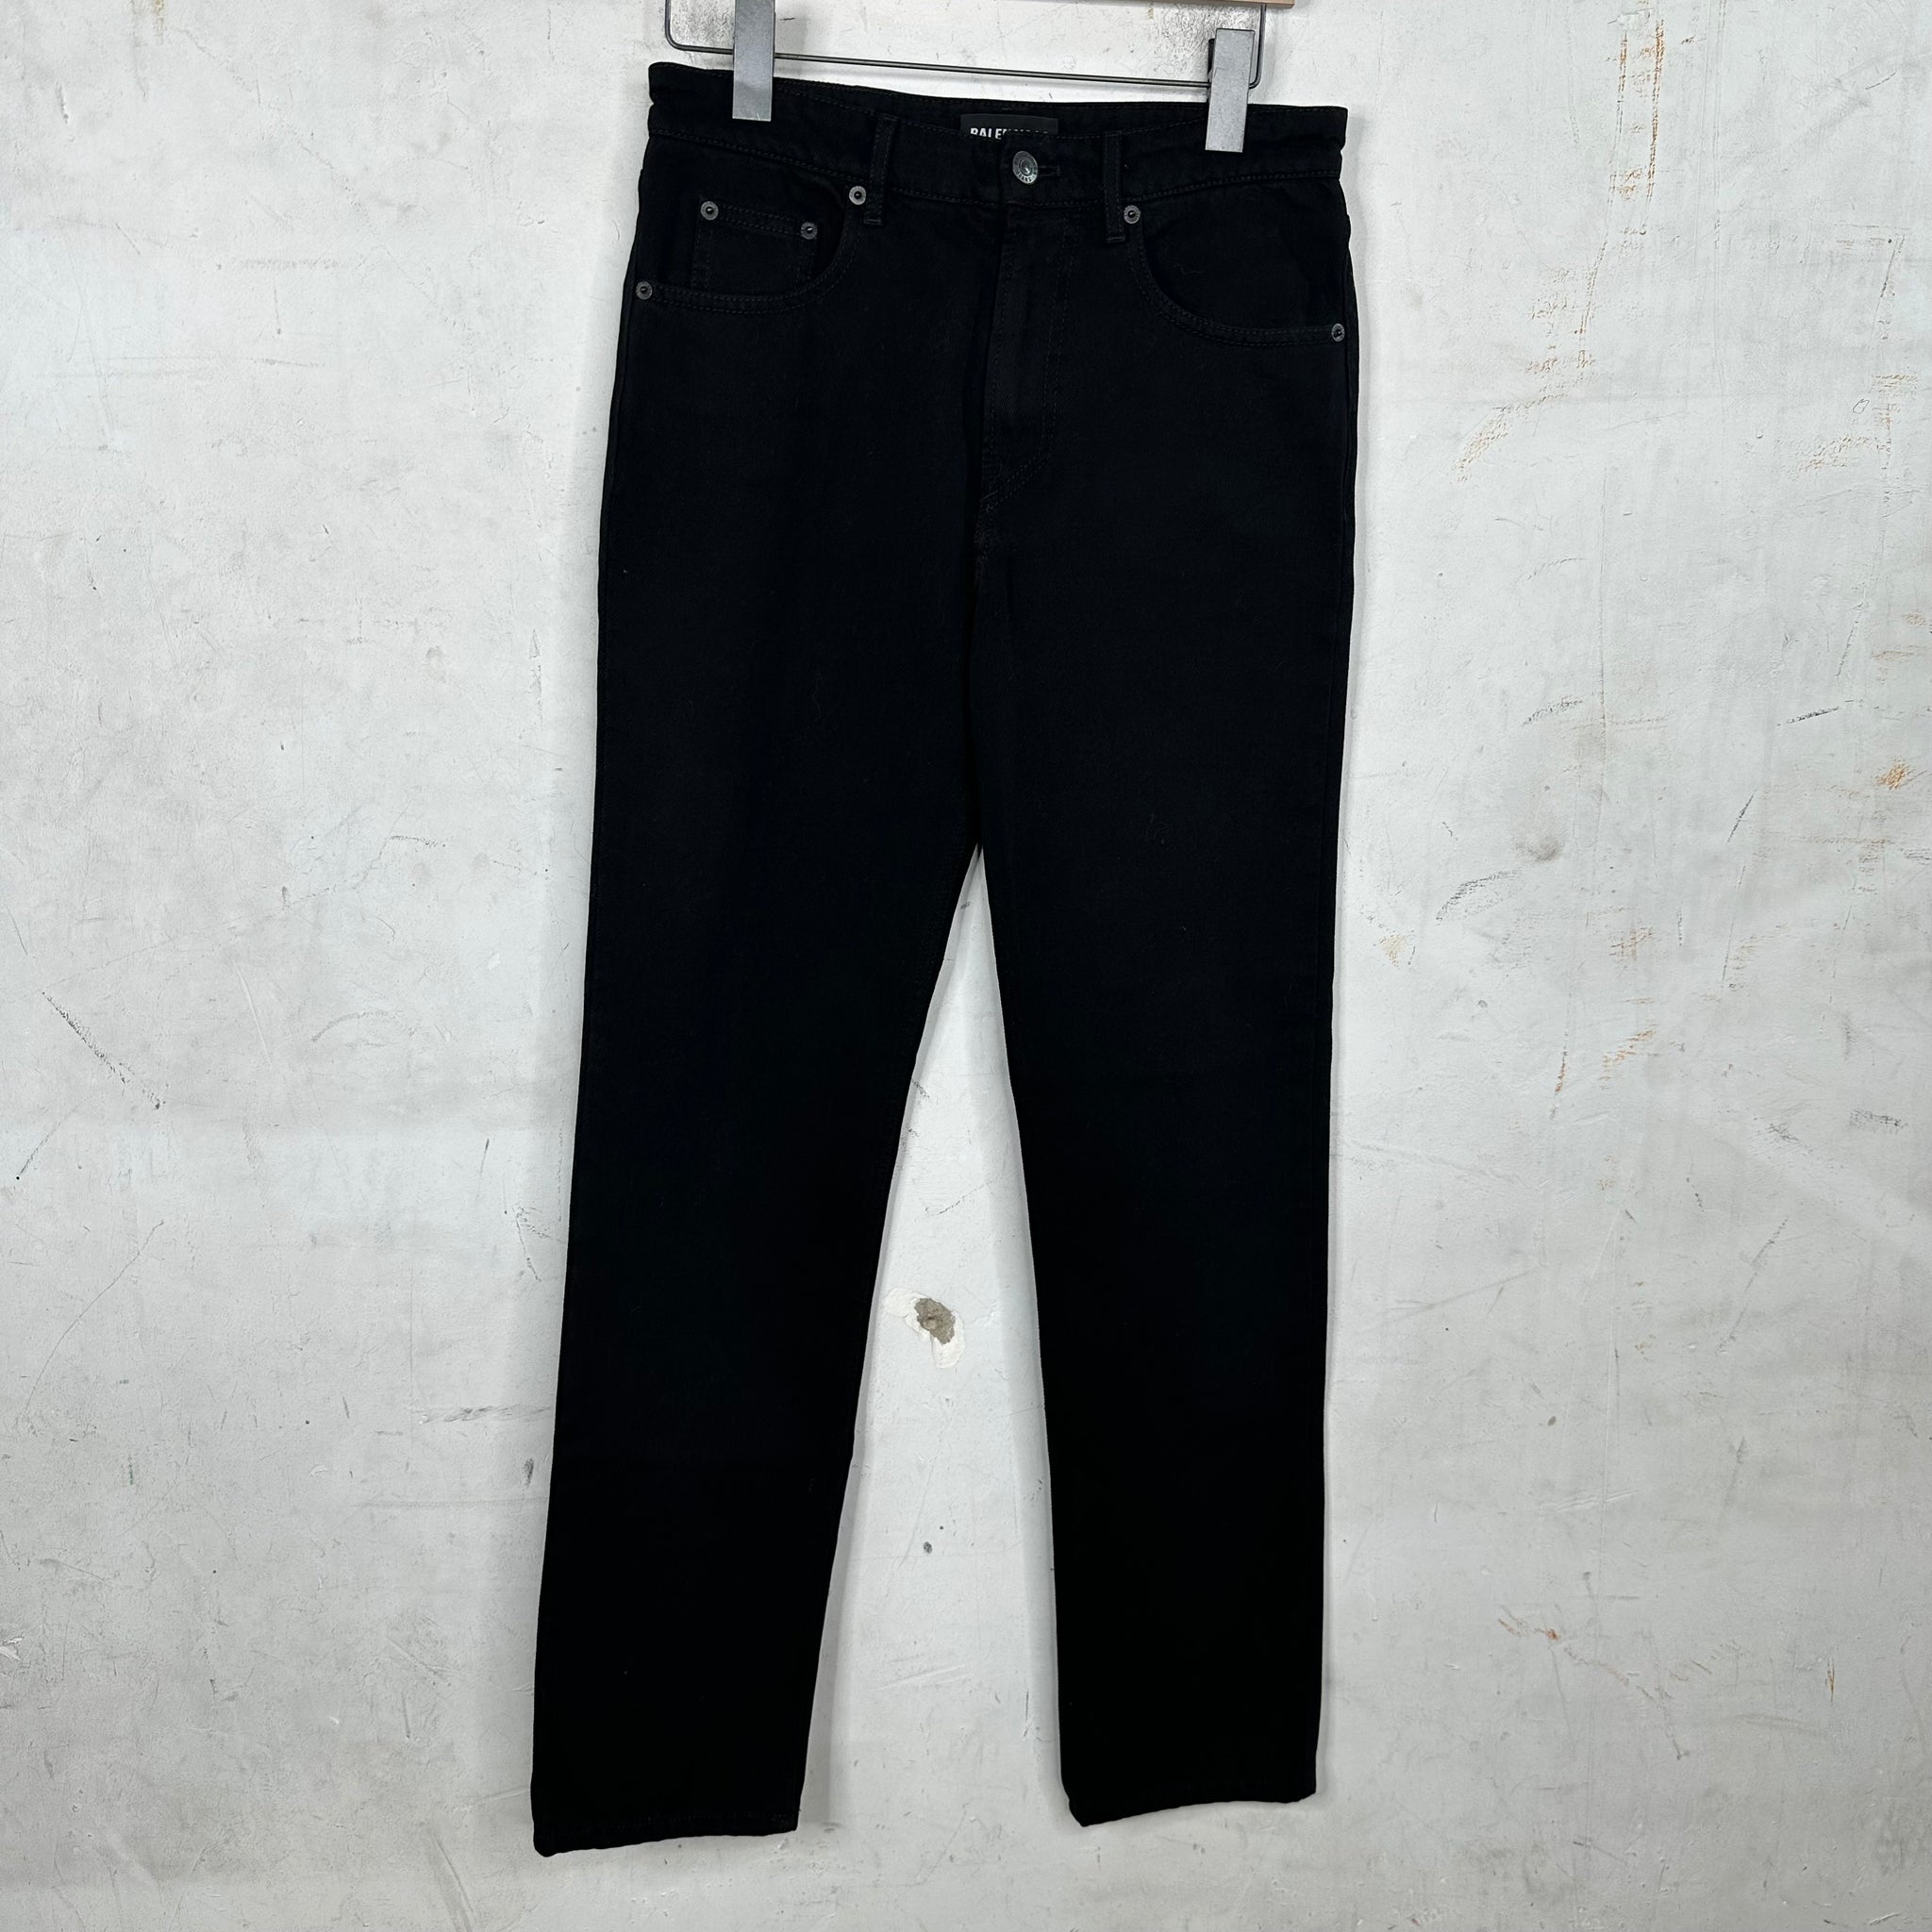 Balenciaga Black Skinny Jeans